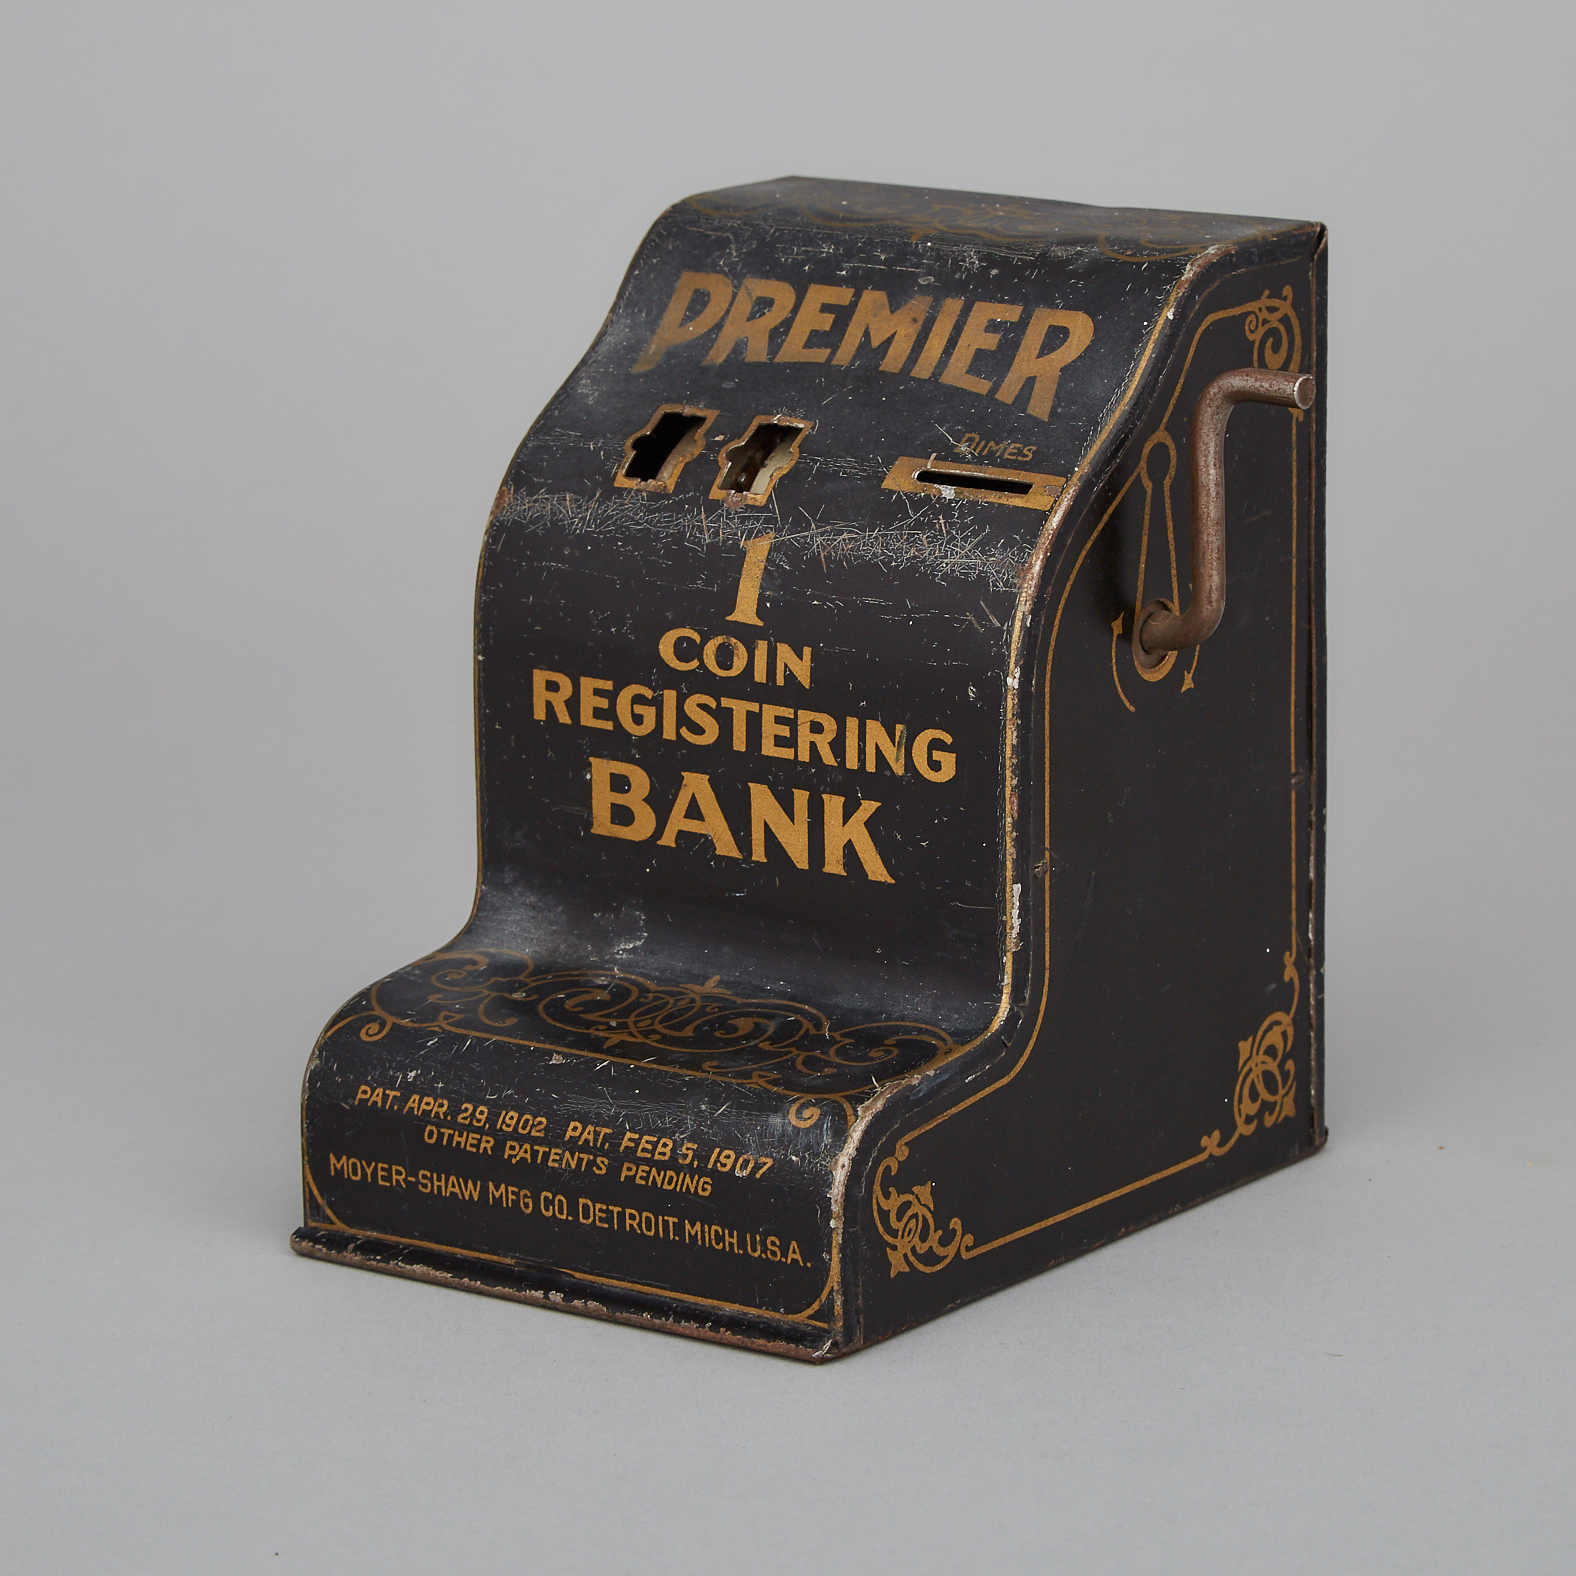 Moyer-Shaw Mfg. Co. "Premier Coin Registering Mechanical Bank, Detroit Michigan., c.1907